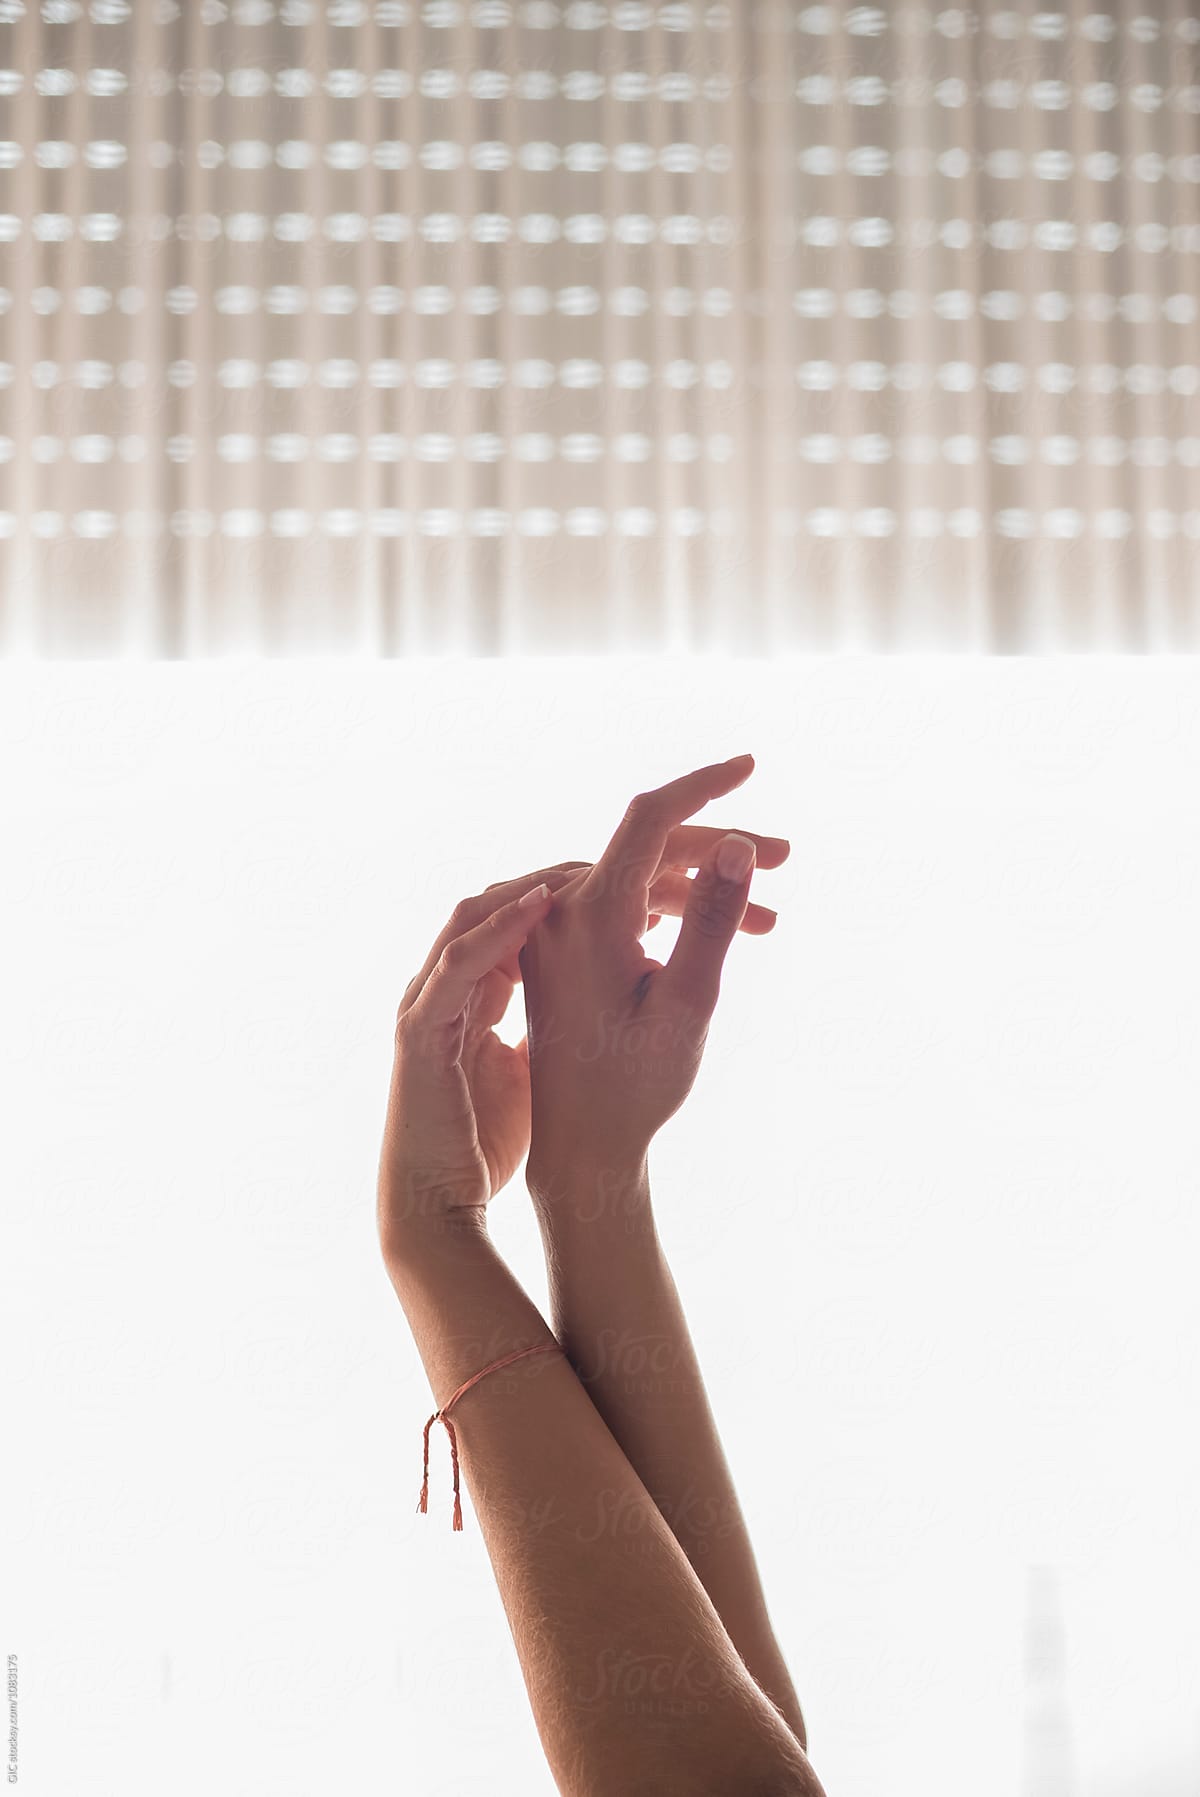 Woman raising hands against a window